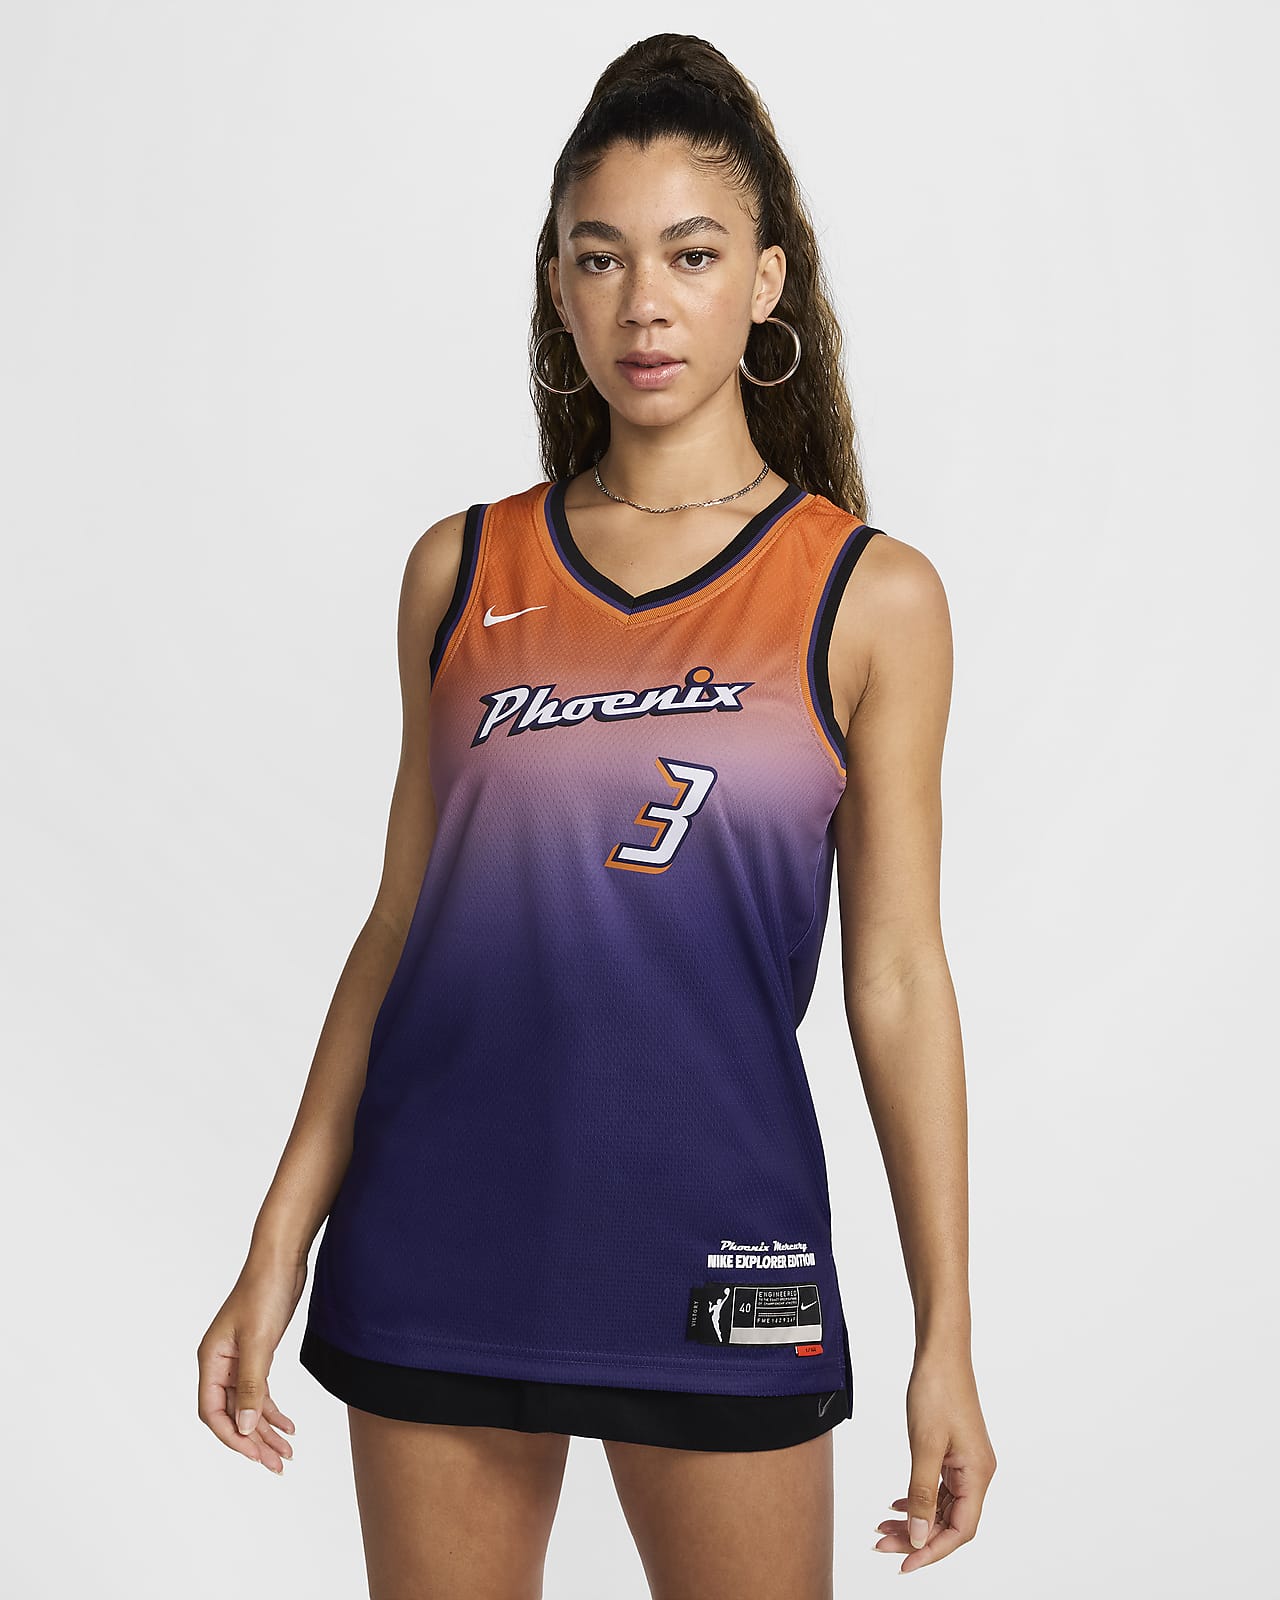 Diana Taurasi Phoenix Mercury Explorer Edition Nike Dri-FIT WNBA Victory Jersey